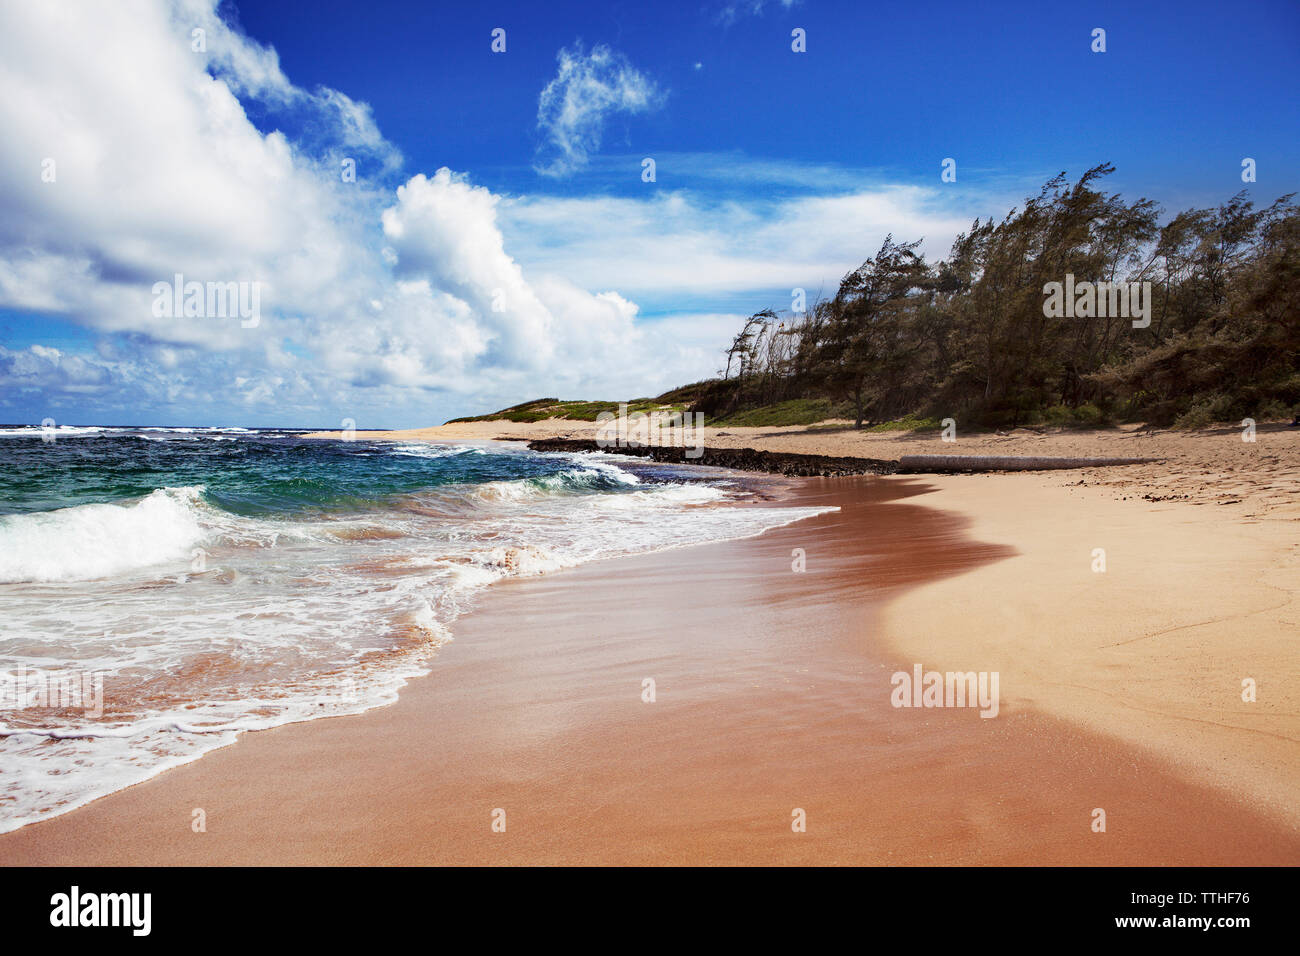 Idyllic view of sea waves rushing towards shore at beach against sky Stock Photo